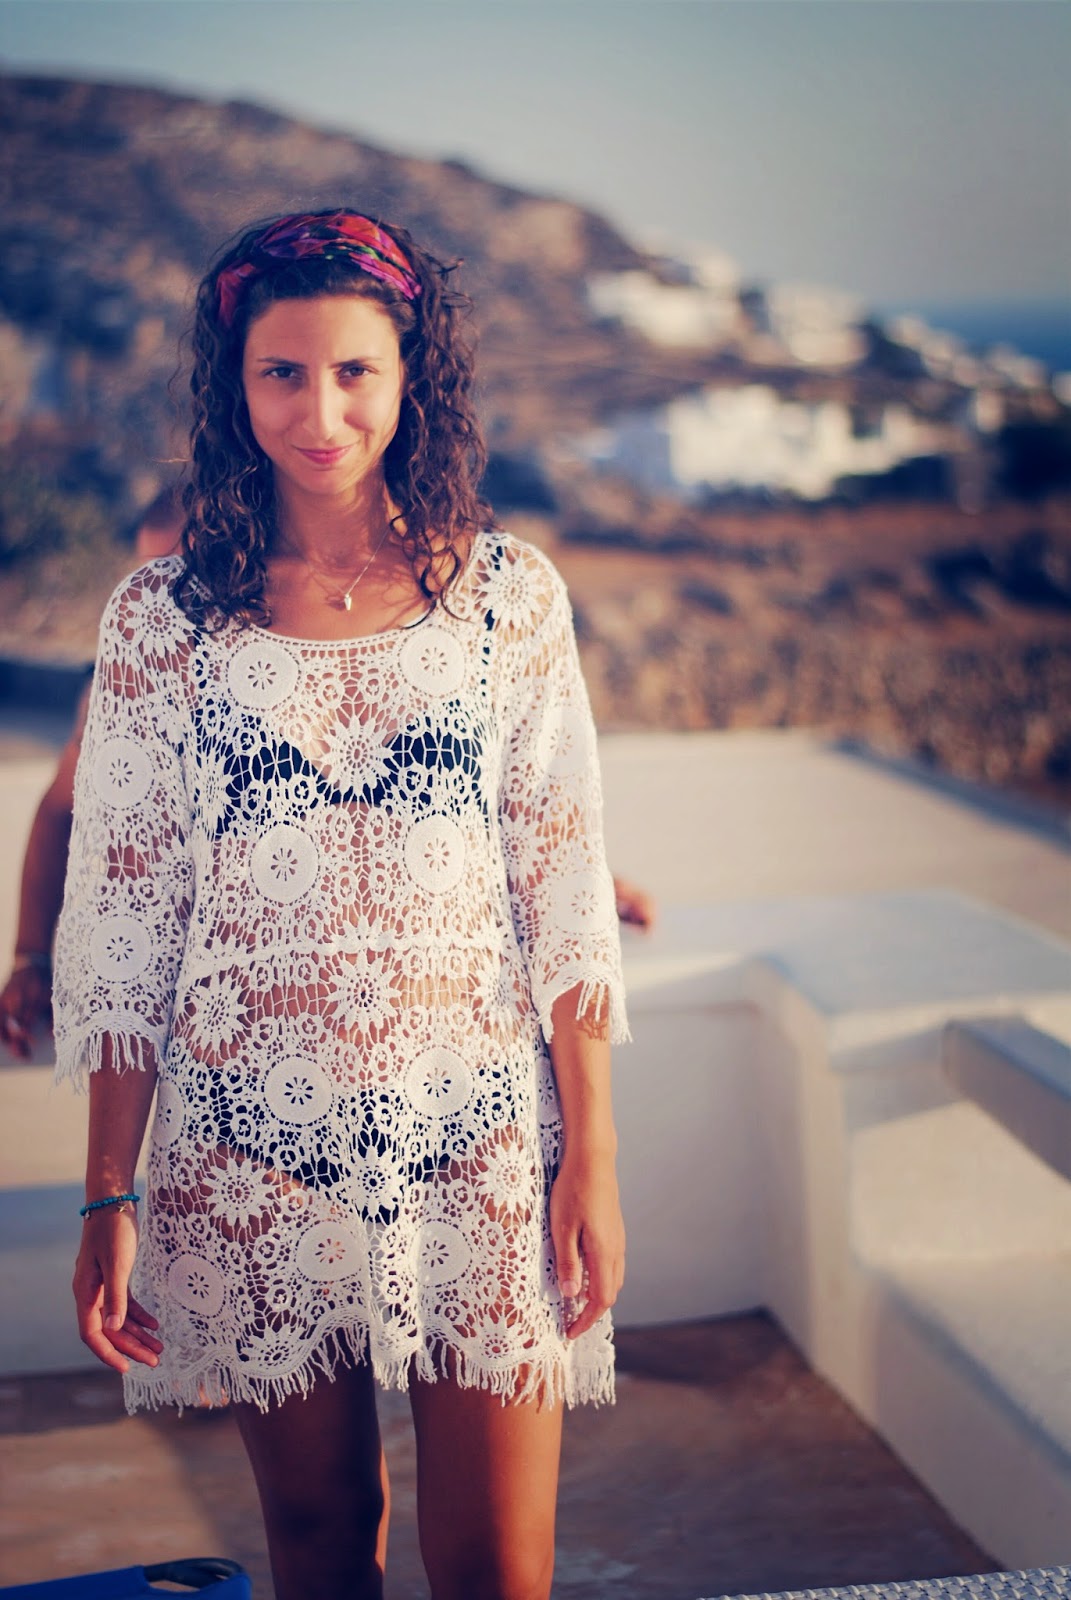 mykonos greece beach summer fashion crochet dress white